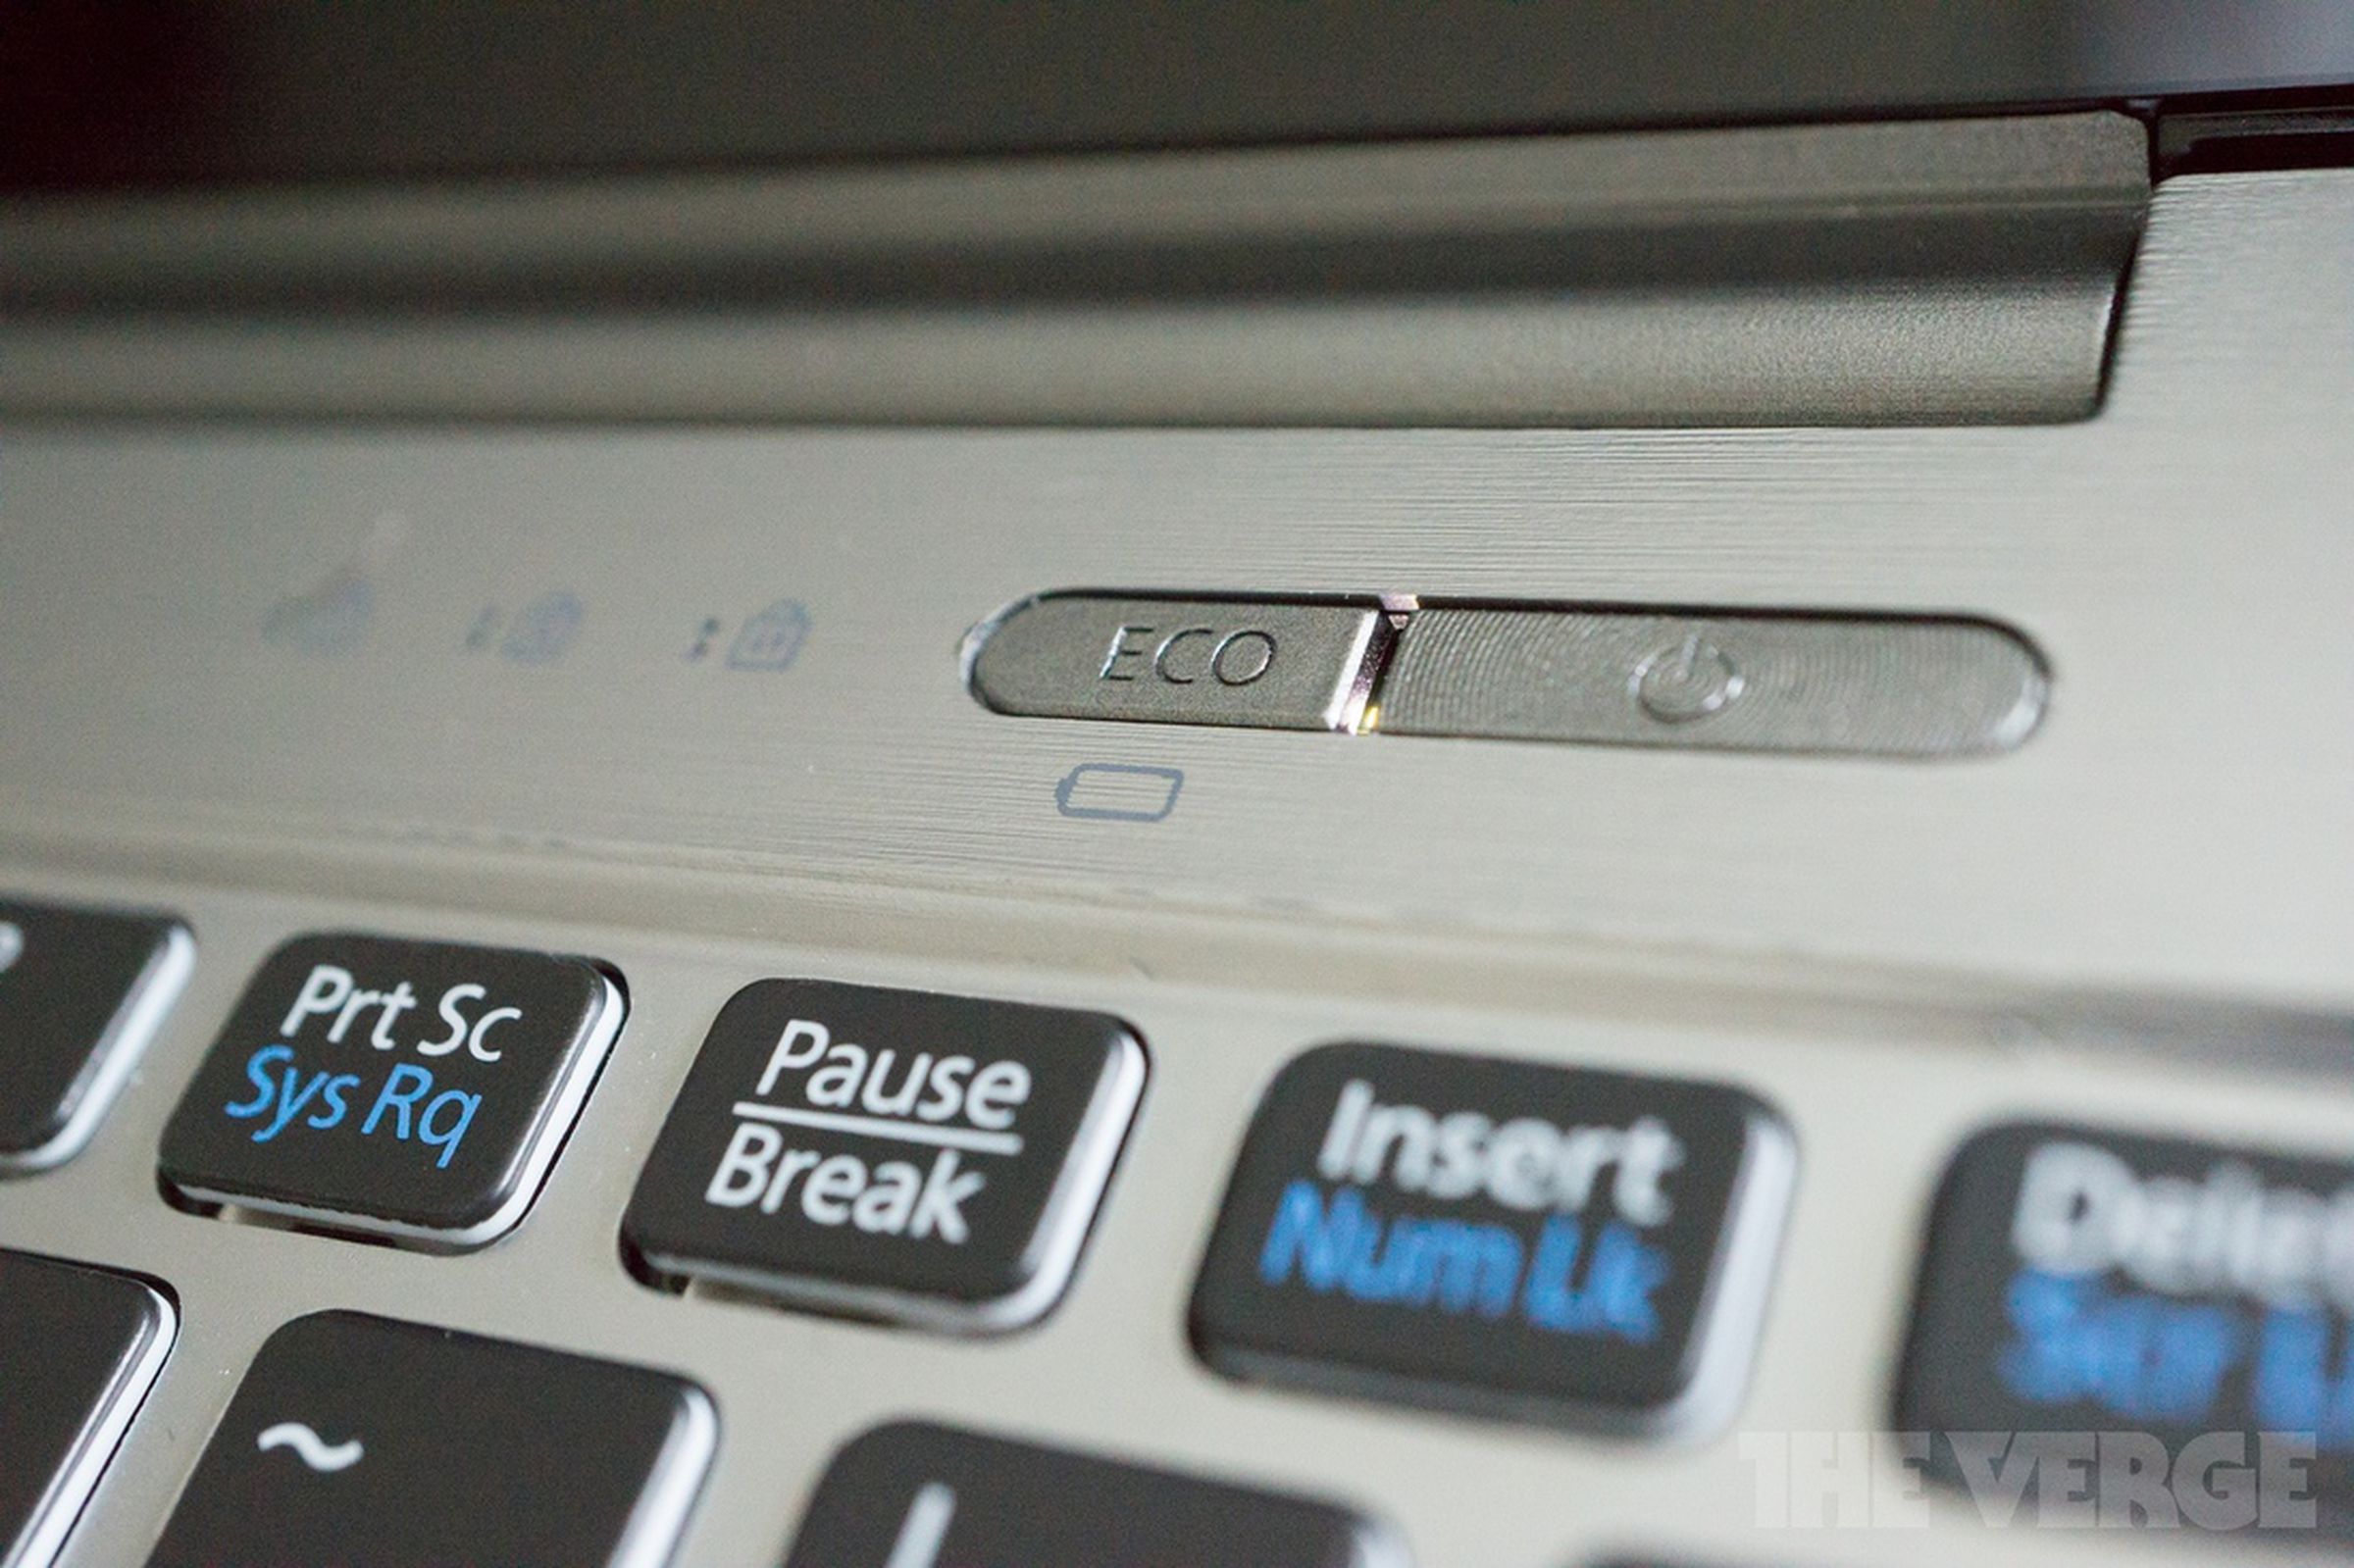 Fujitsu UH90/L laptop hands-on photos